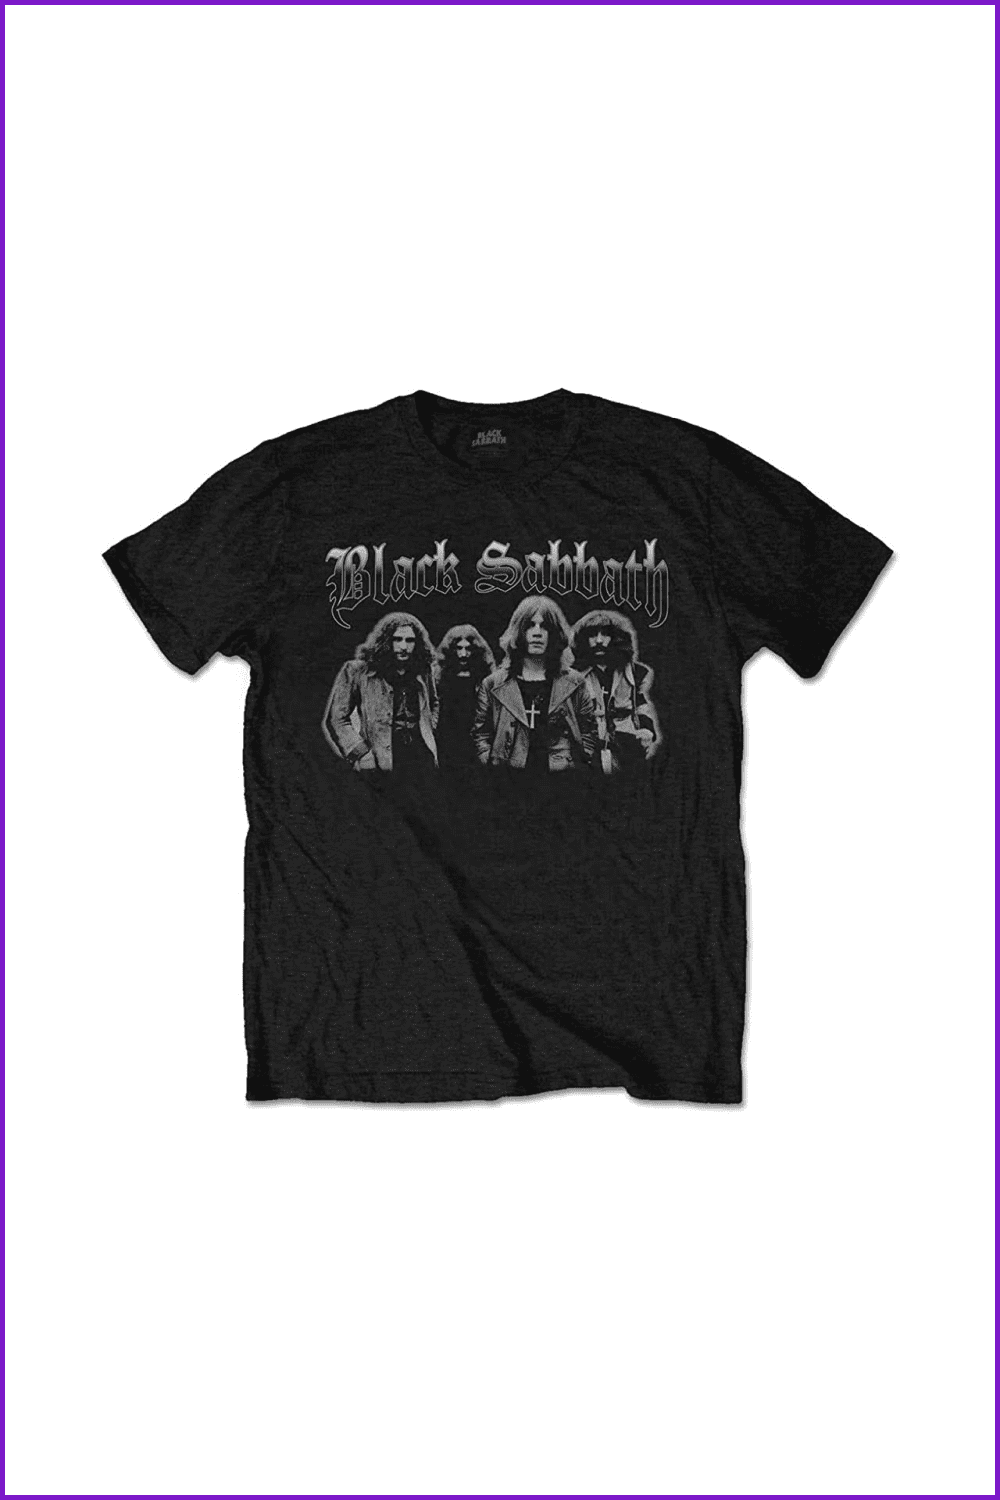 Black Sabbath 'Greyscale Group' (Black) T-Shirt.